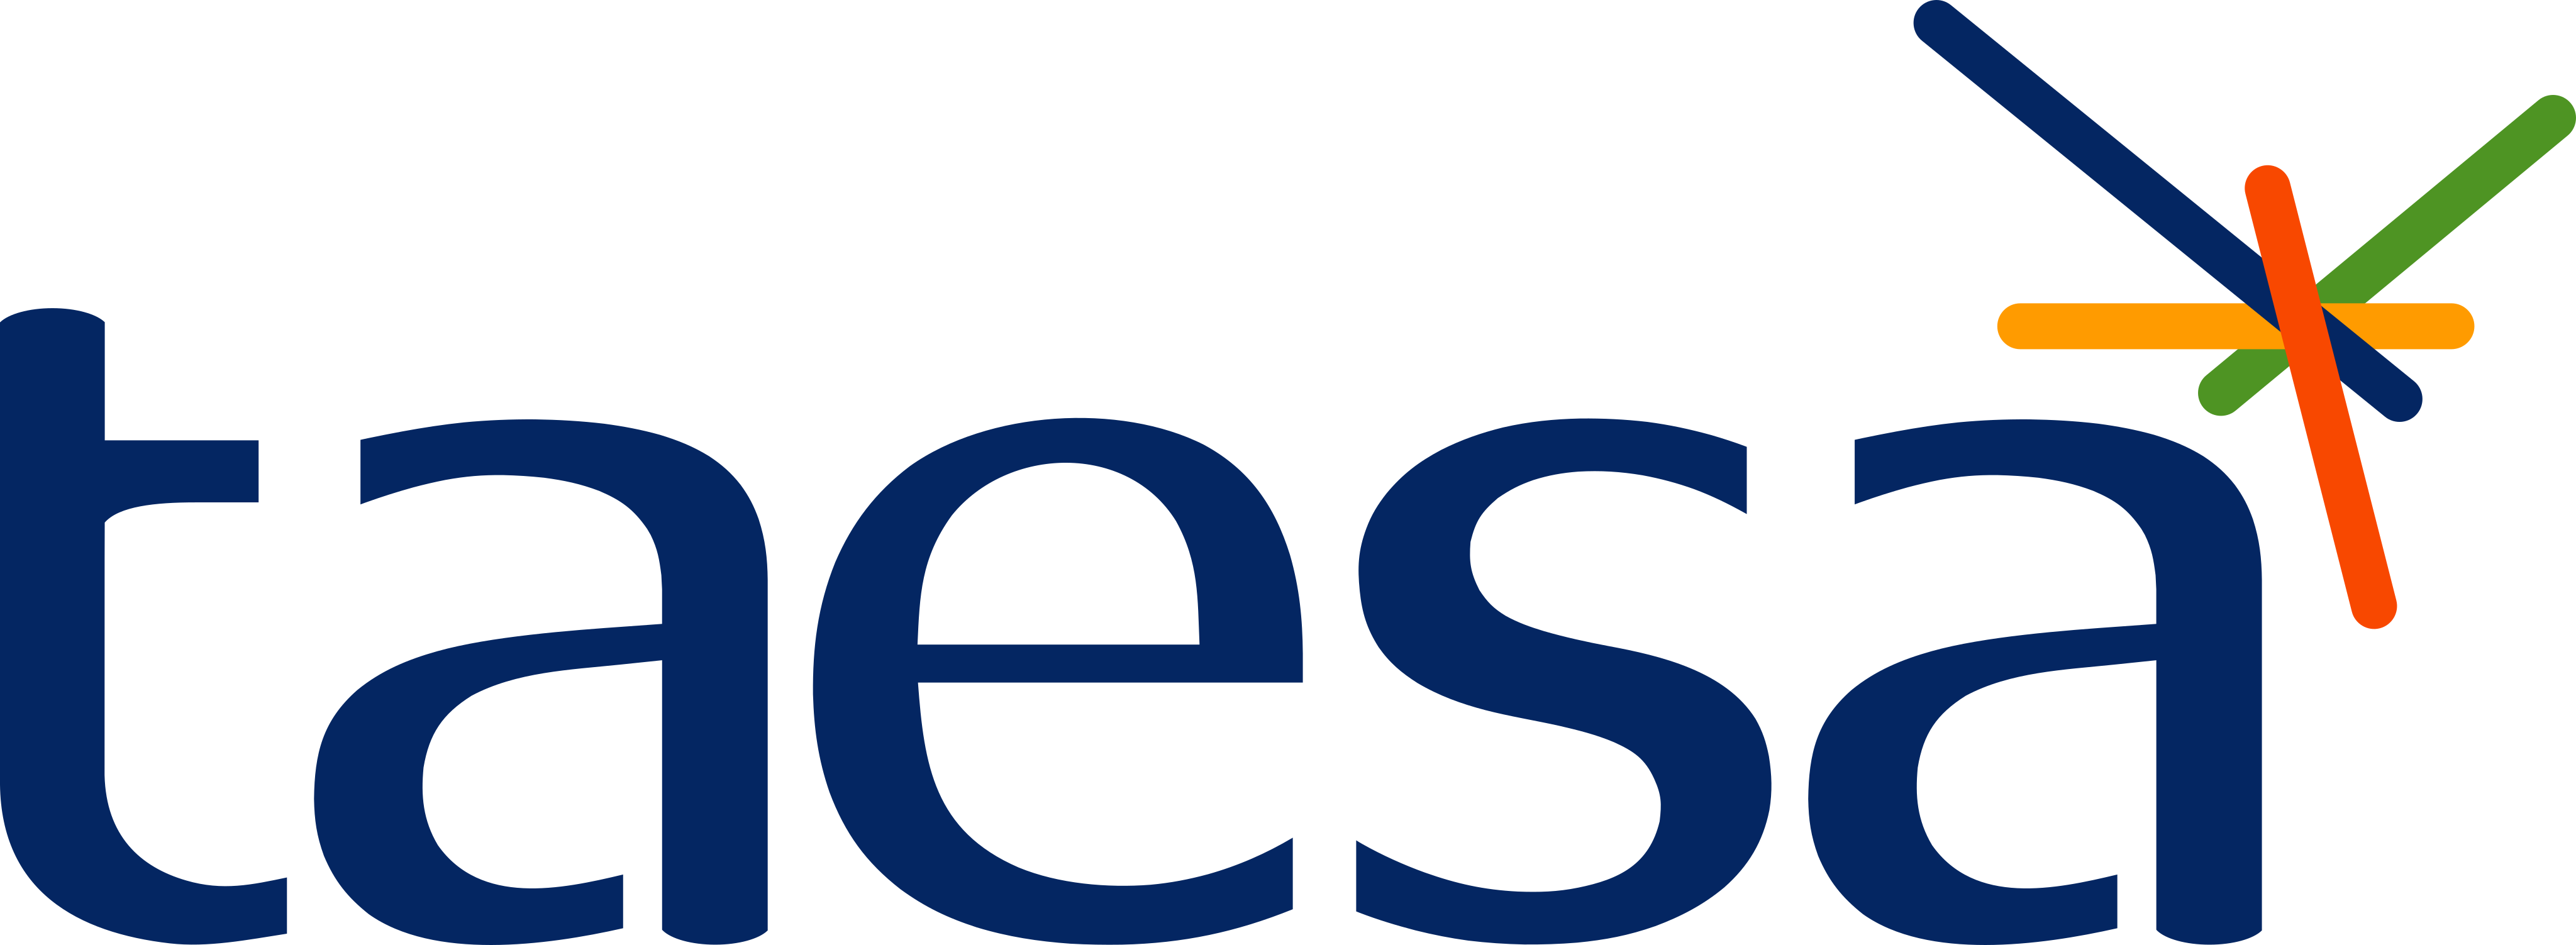 Taesa Logo.